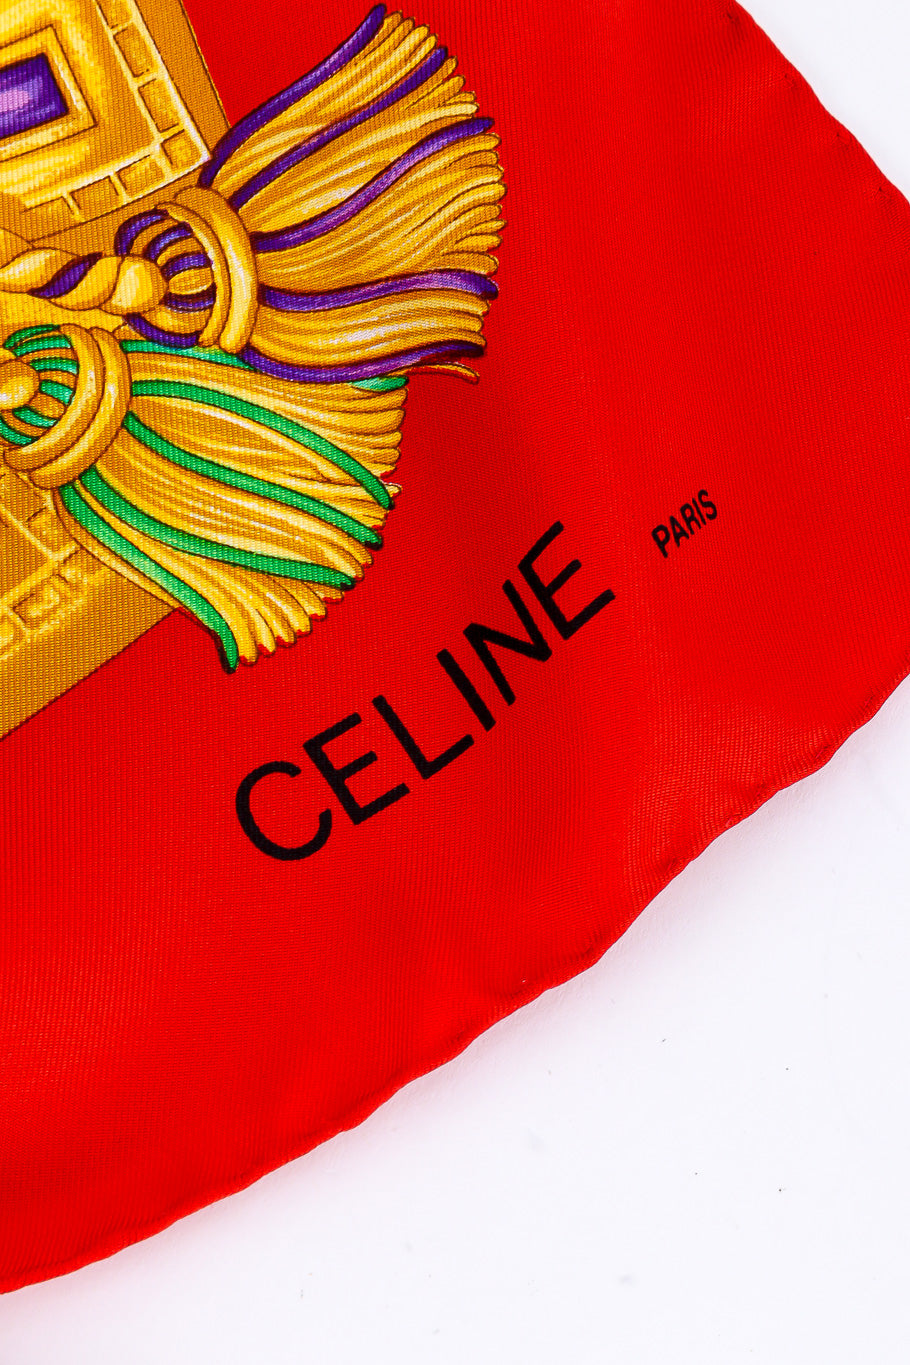 Gemstone silk scarf by Celine Photo of Designer Signature @recessla